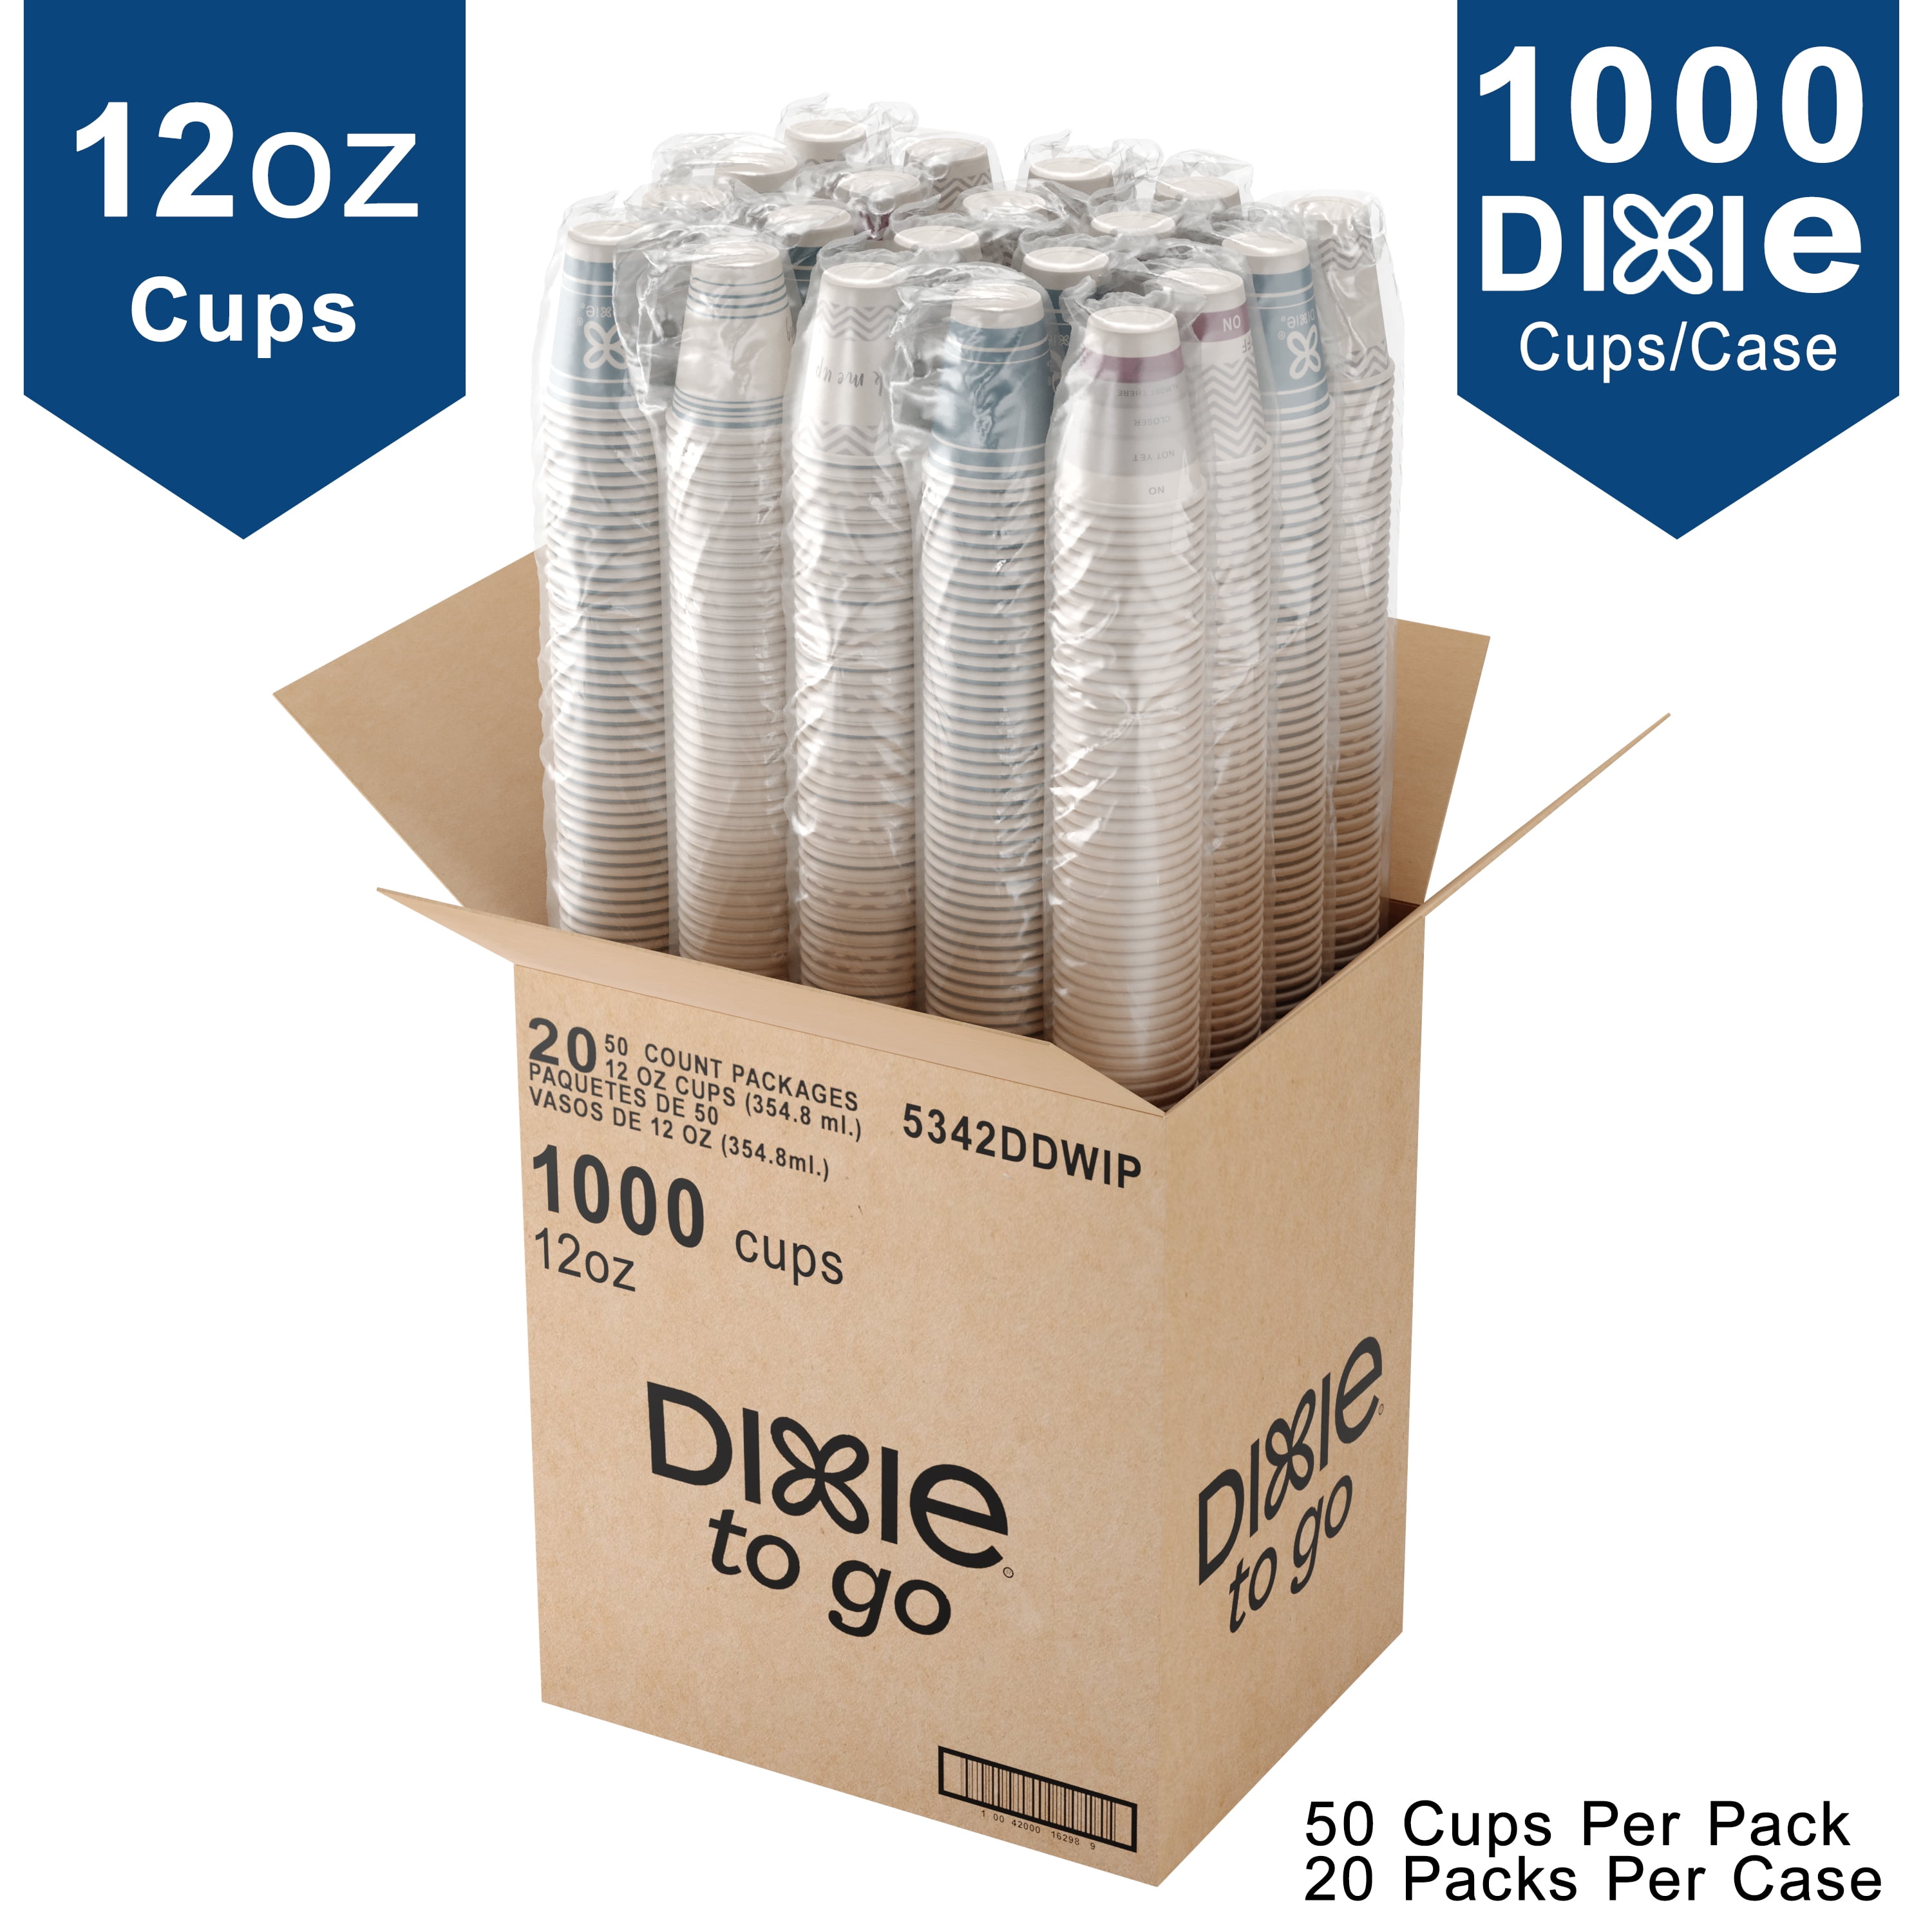 Dixie® Everyday 3oz 200ct Bath Cups